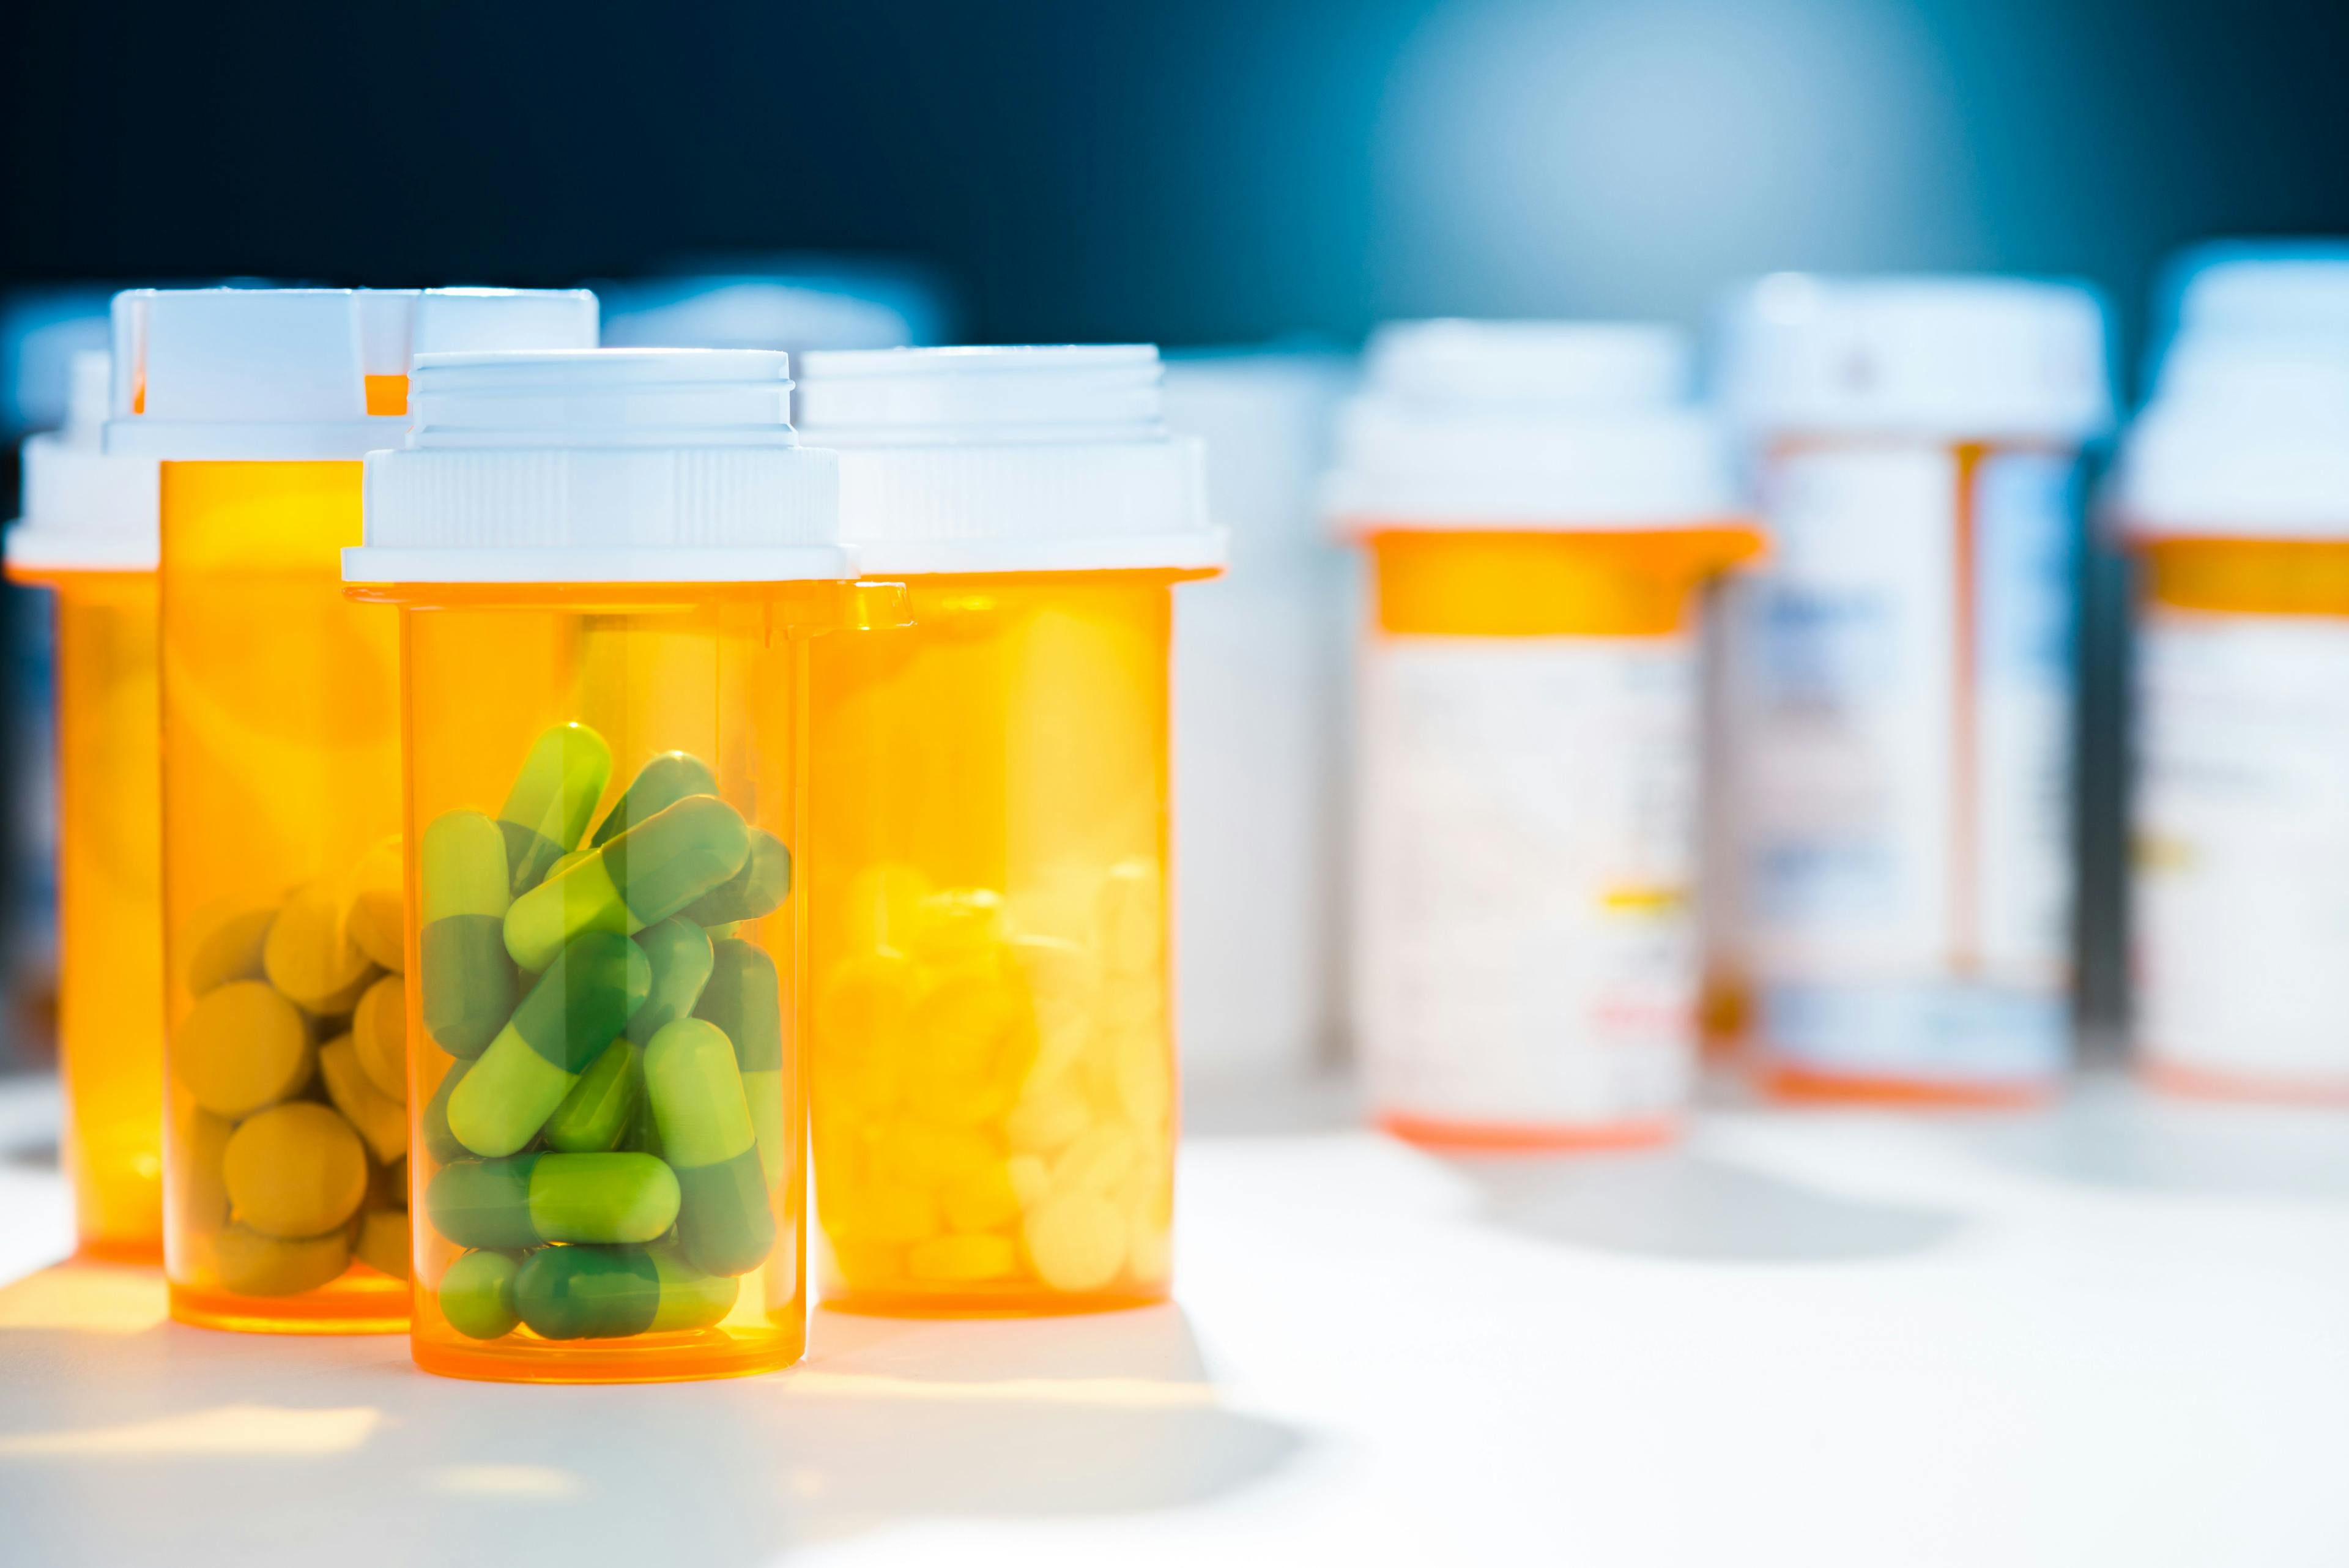 Prescription pill bottles | Eric Hood | stock.adobe.com